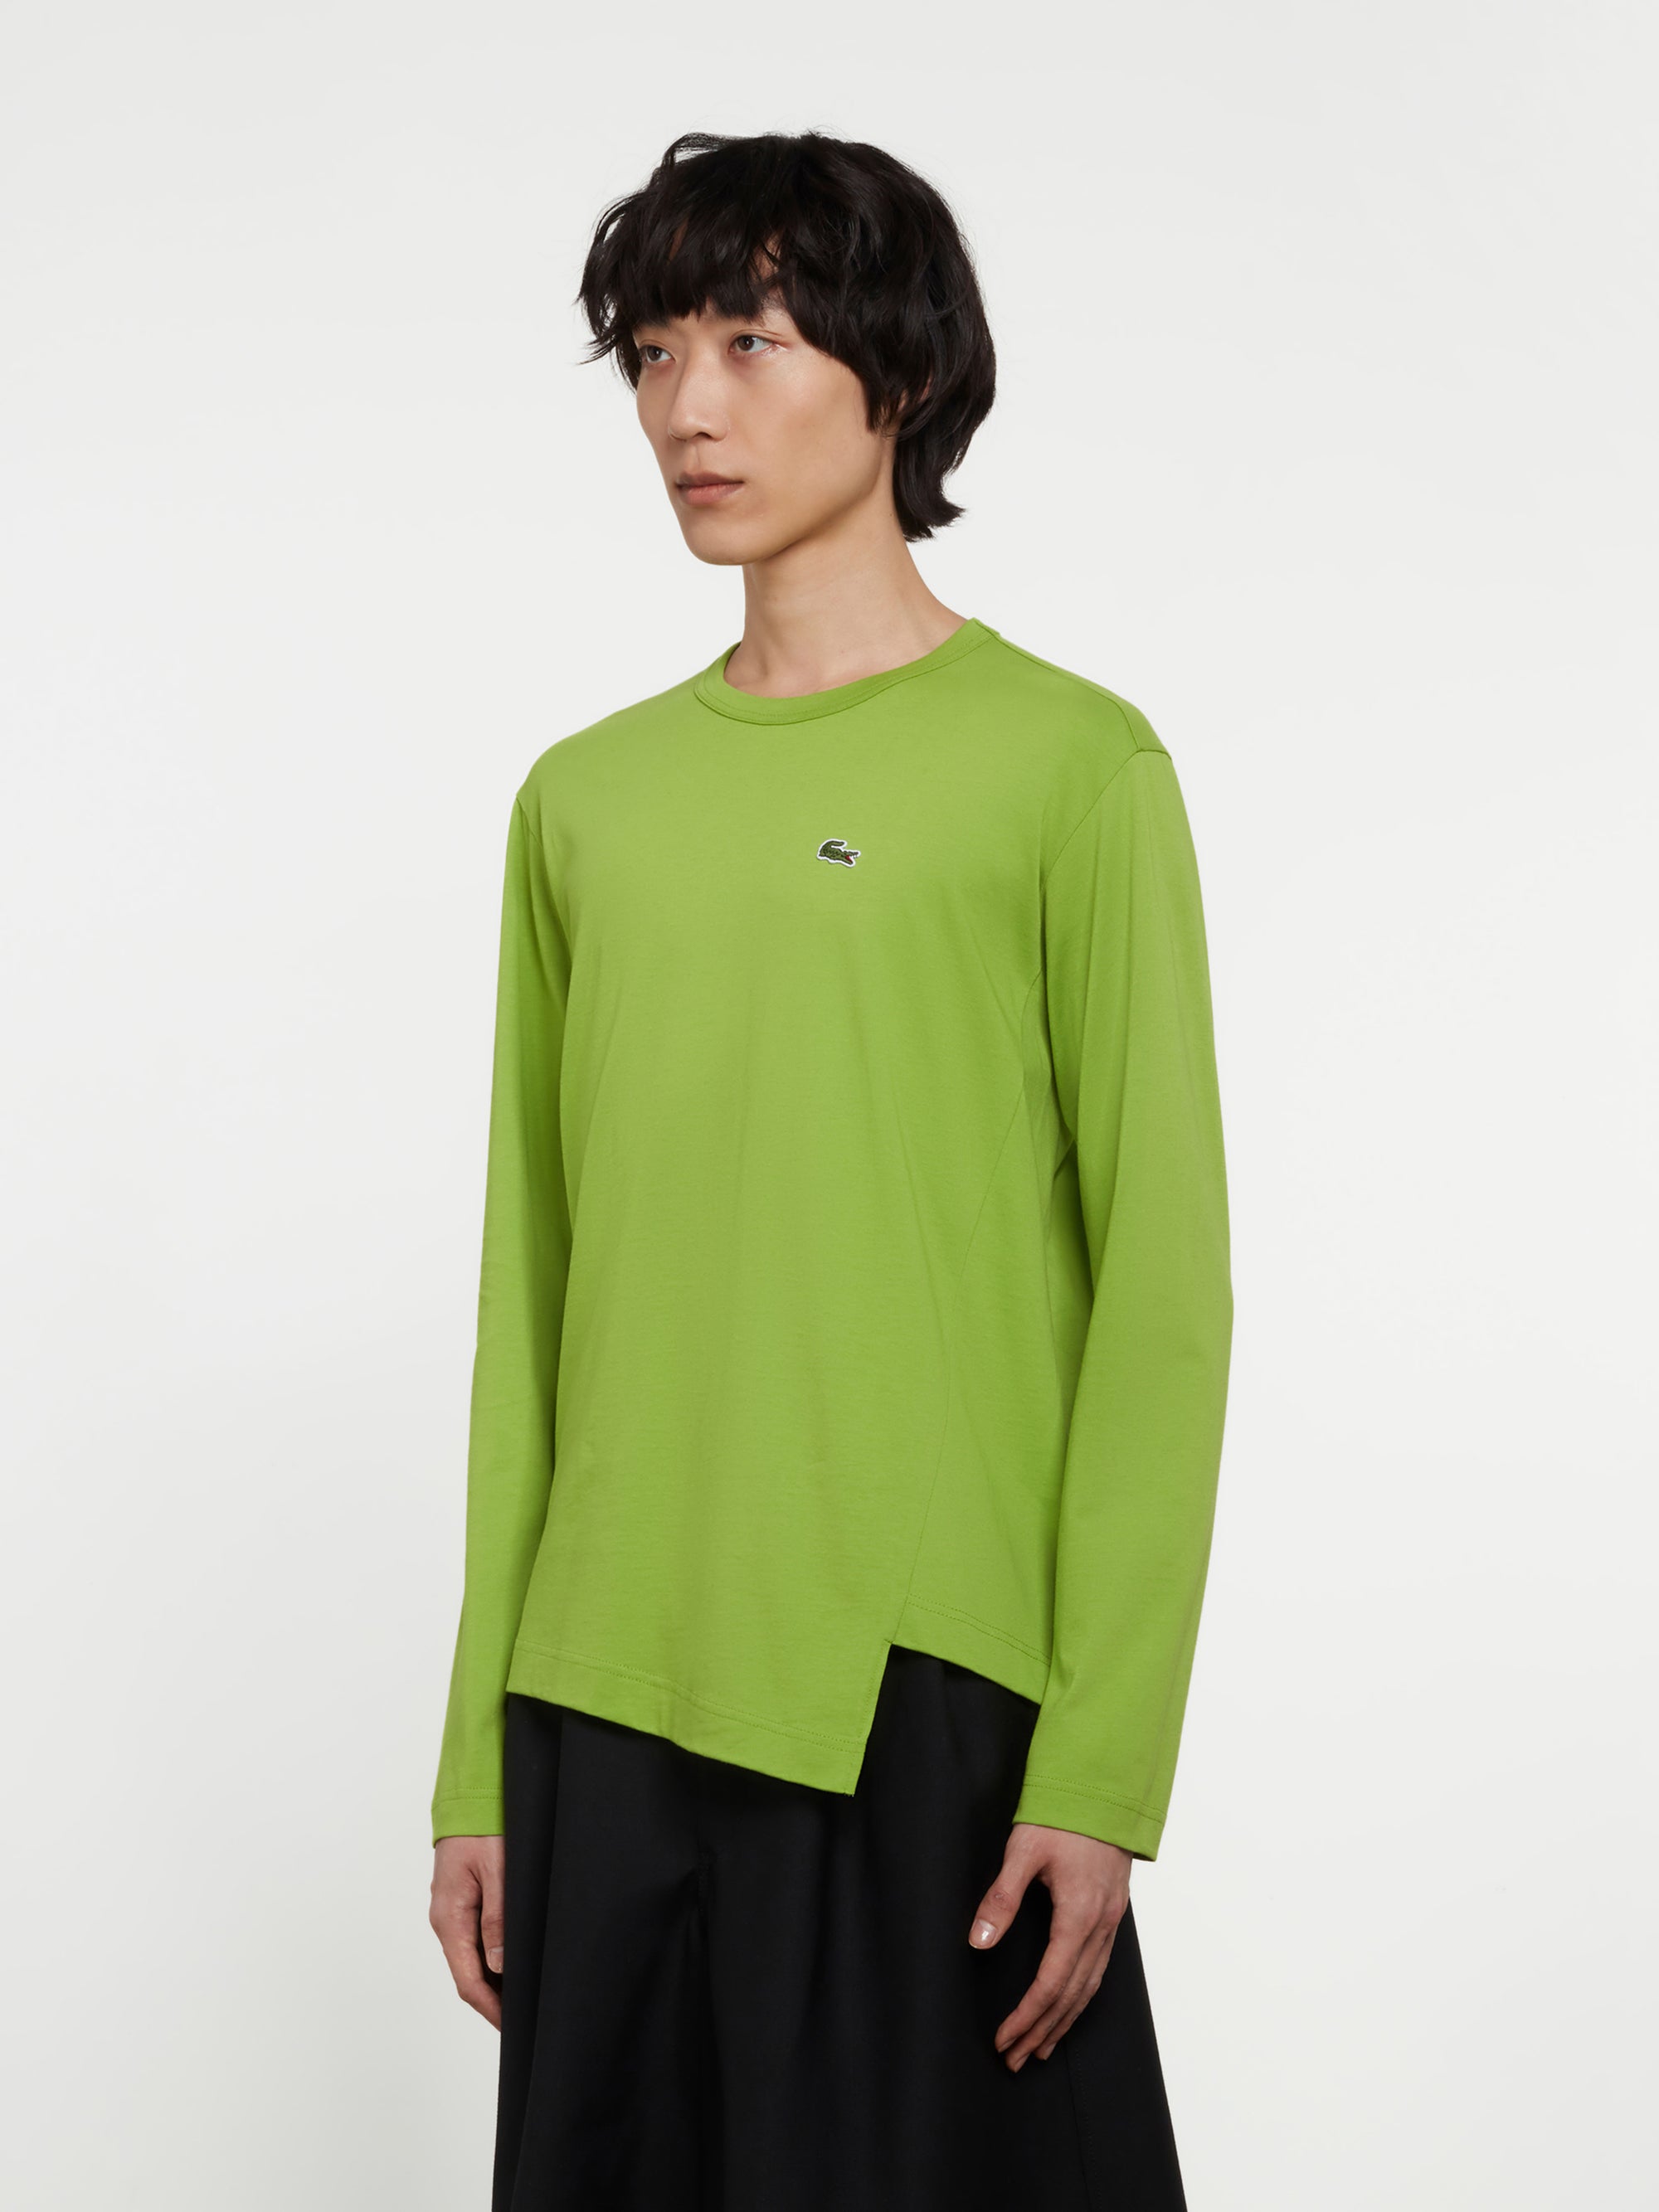 CDG Shirt - Lacoste Men’s Long Sleeve T-Shirt - (Green) view 2